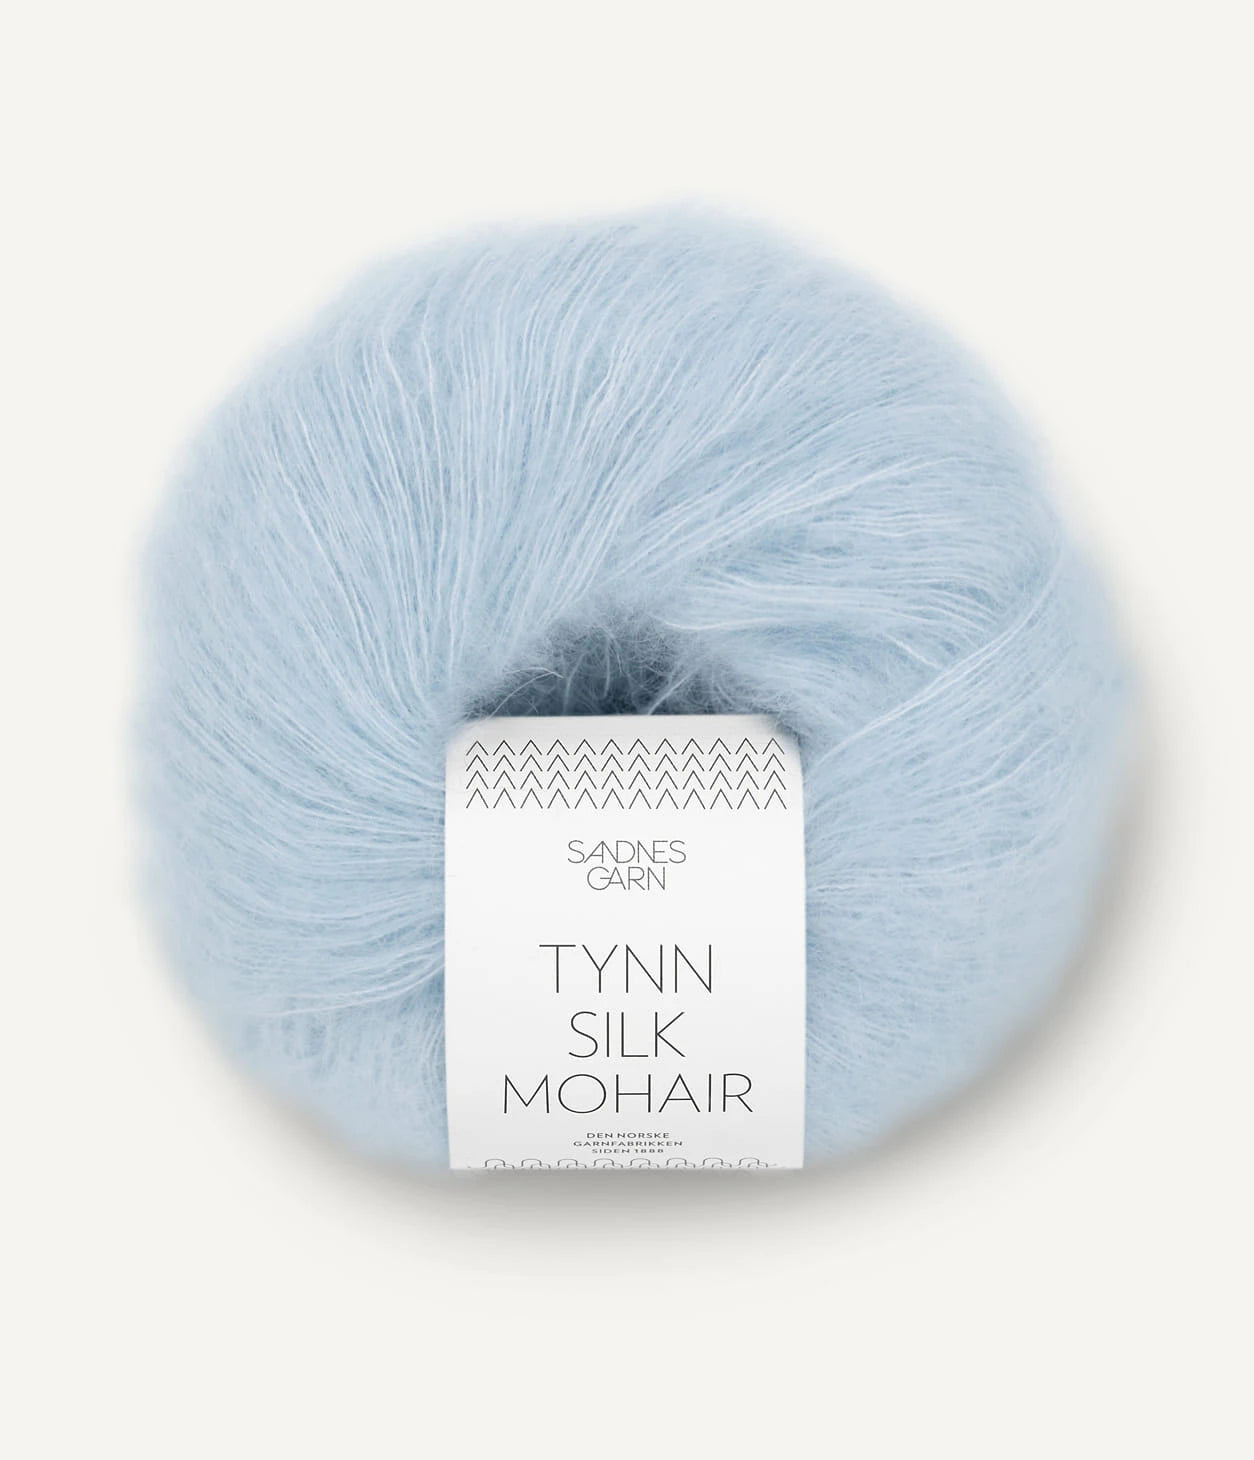 Kuvassa on Sandnes Garn Tynn Silk Mohair -lanka (yarn) värissä Lys Blå.